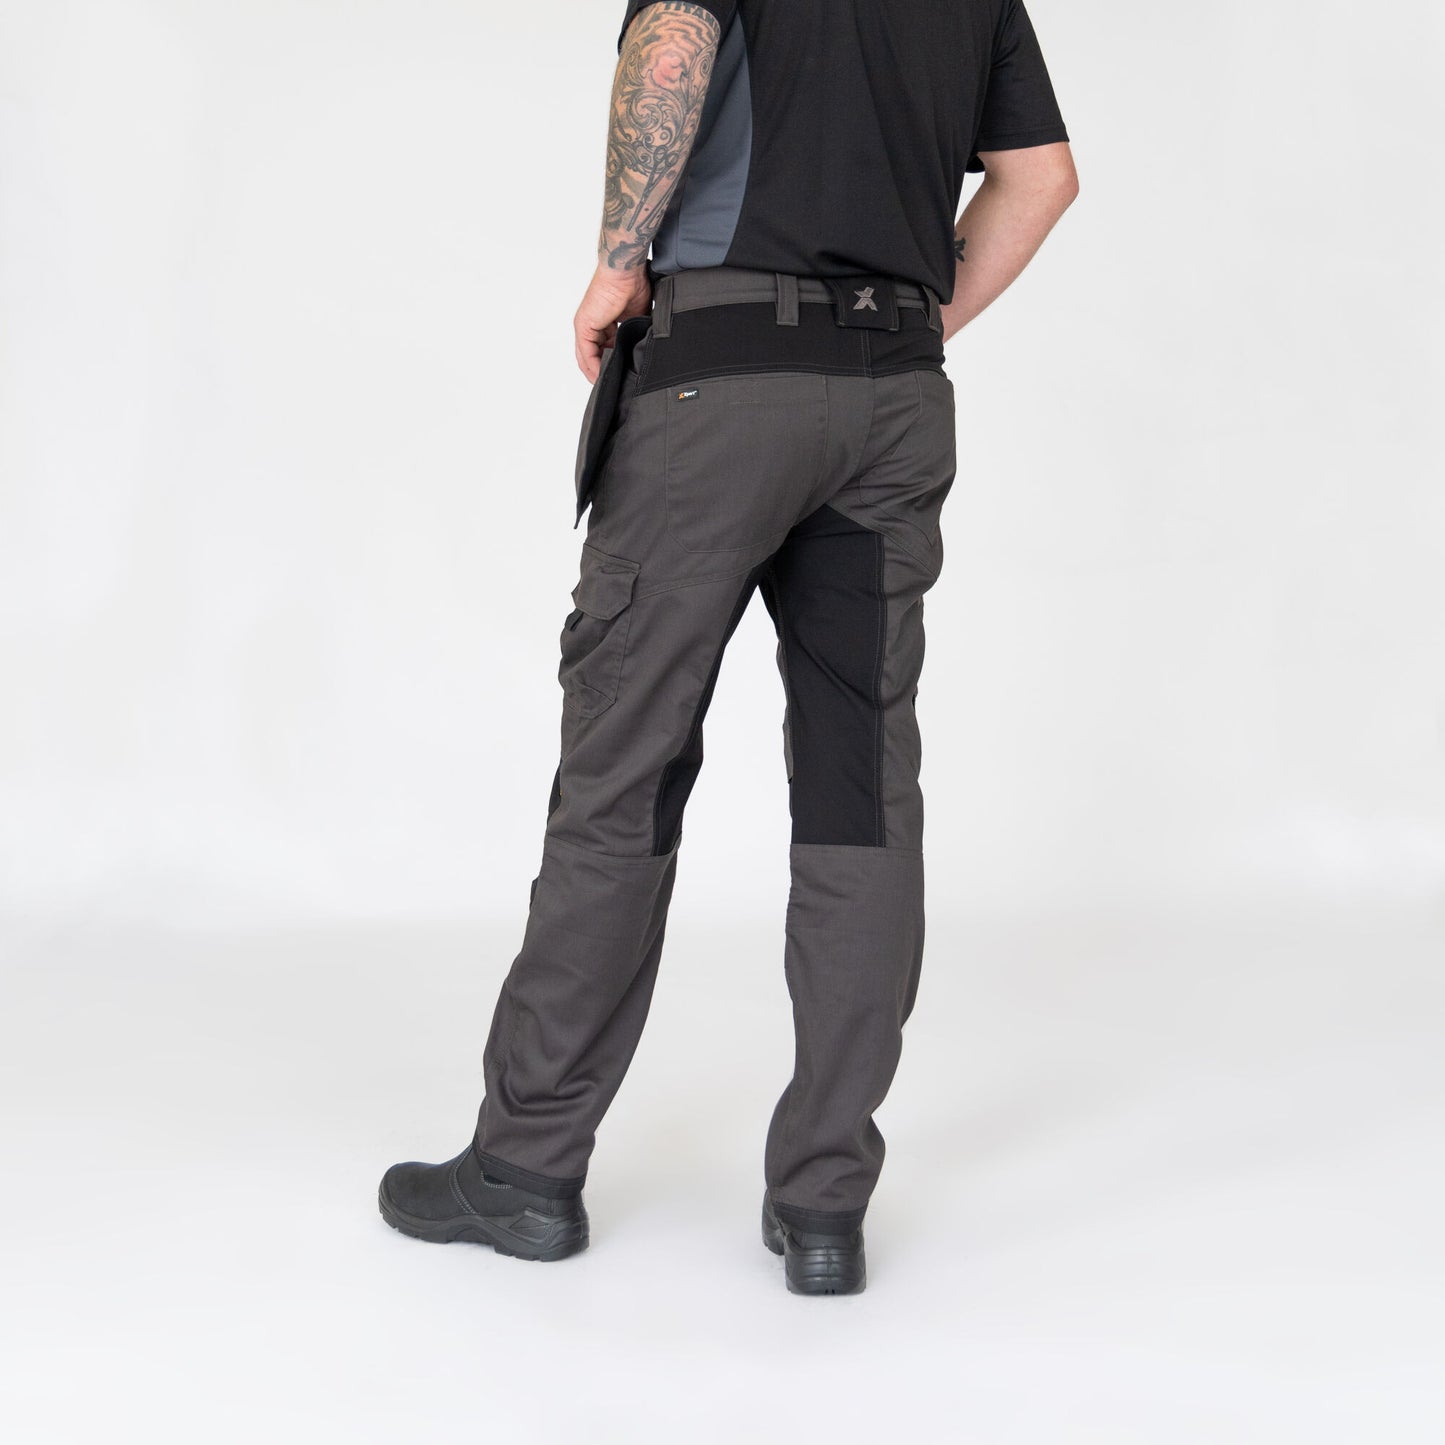 Xpert Pro Stretch+ Work Trousers - Grey/Black